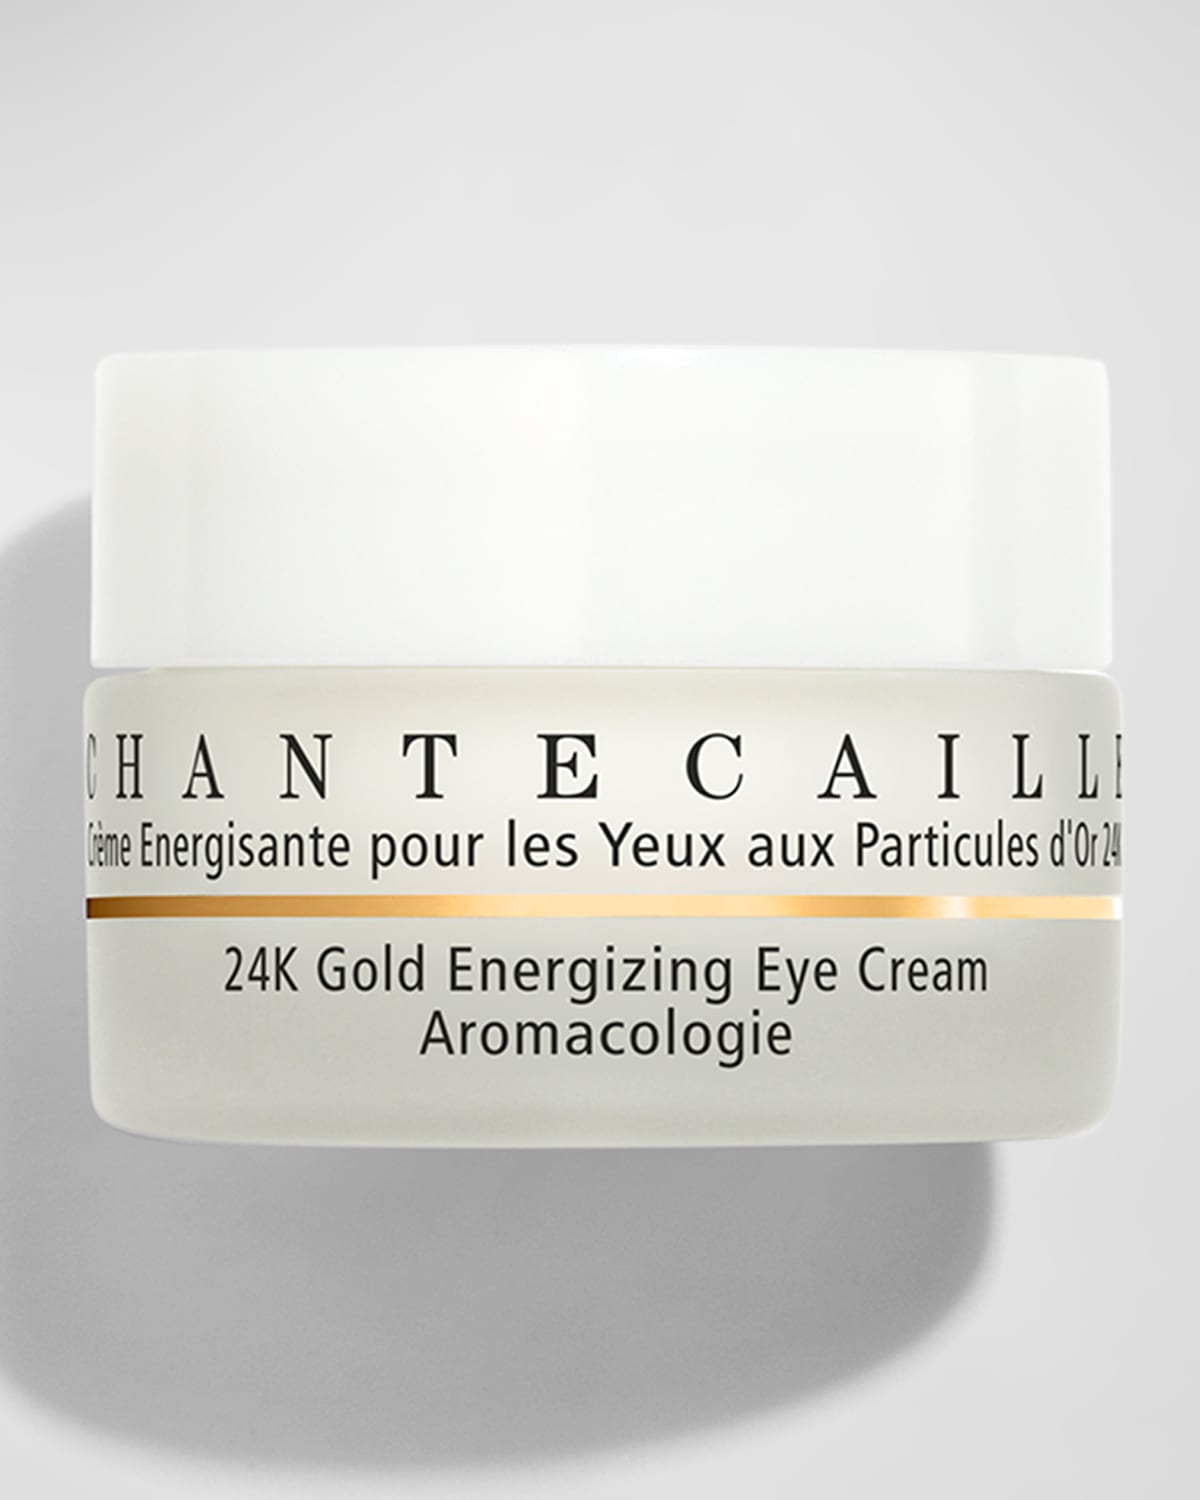 Shop Chantecaille 24k Gold Energizing Eye Cream